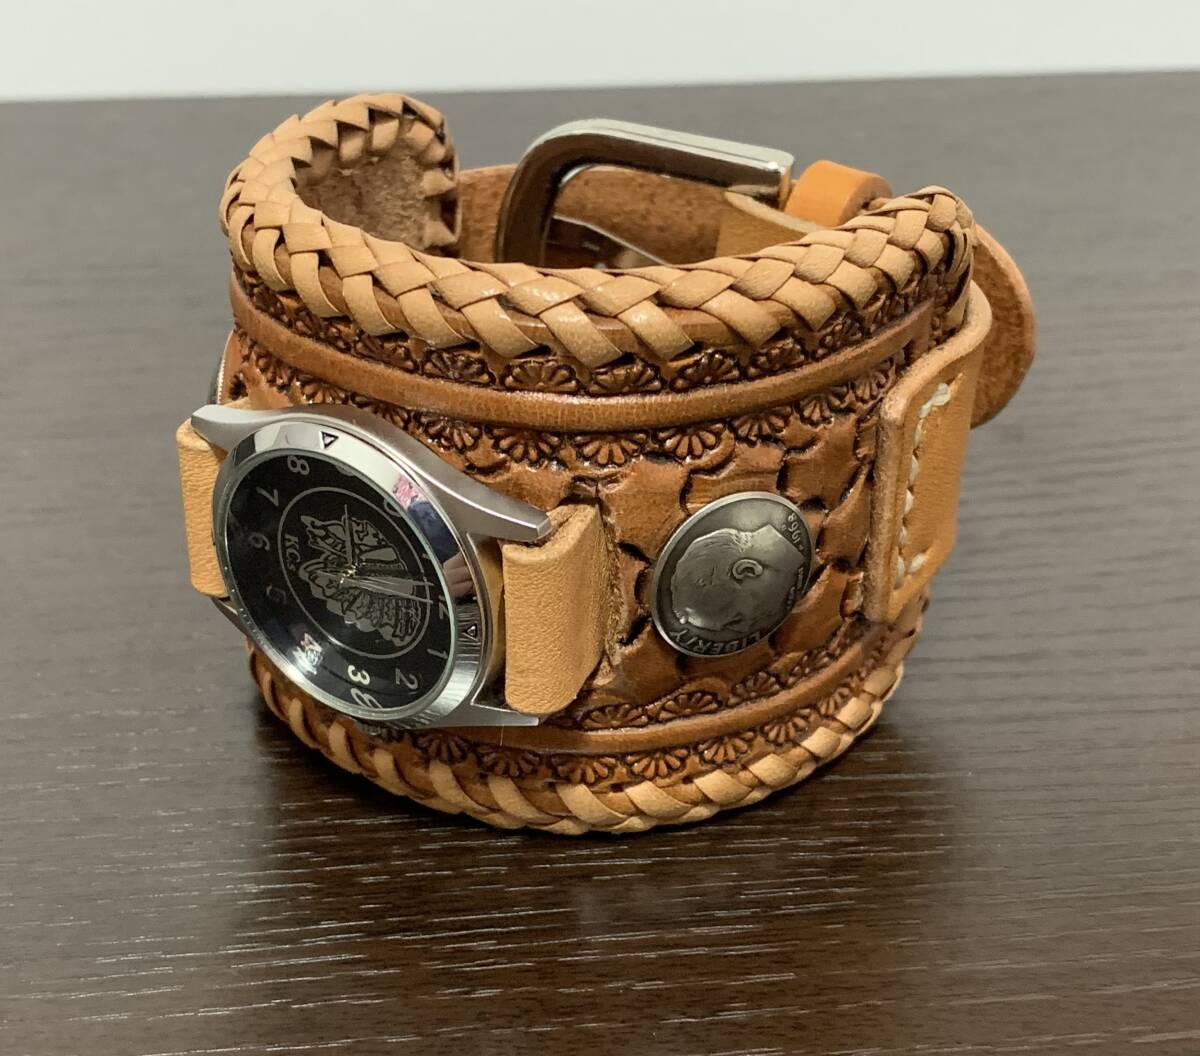  Hamann oak leather watch bangle watch 